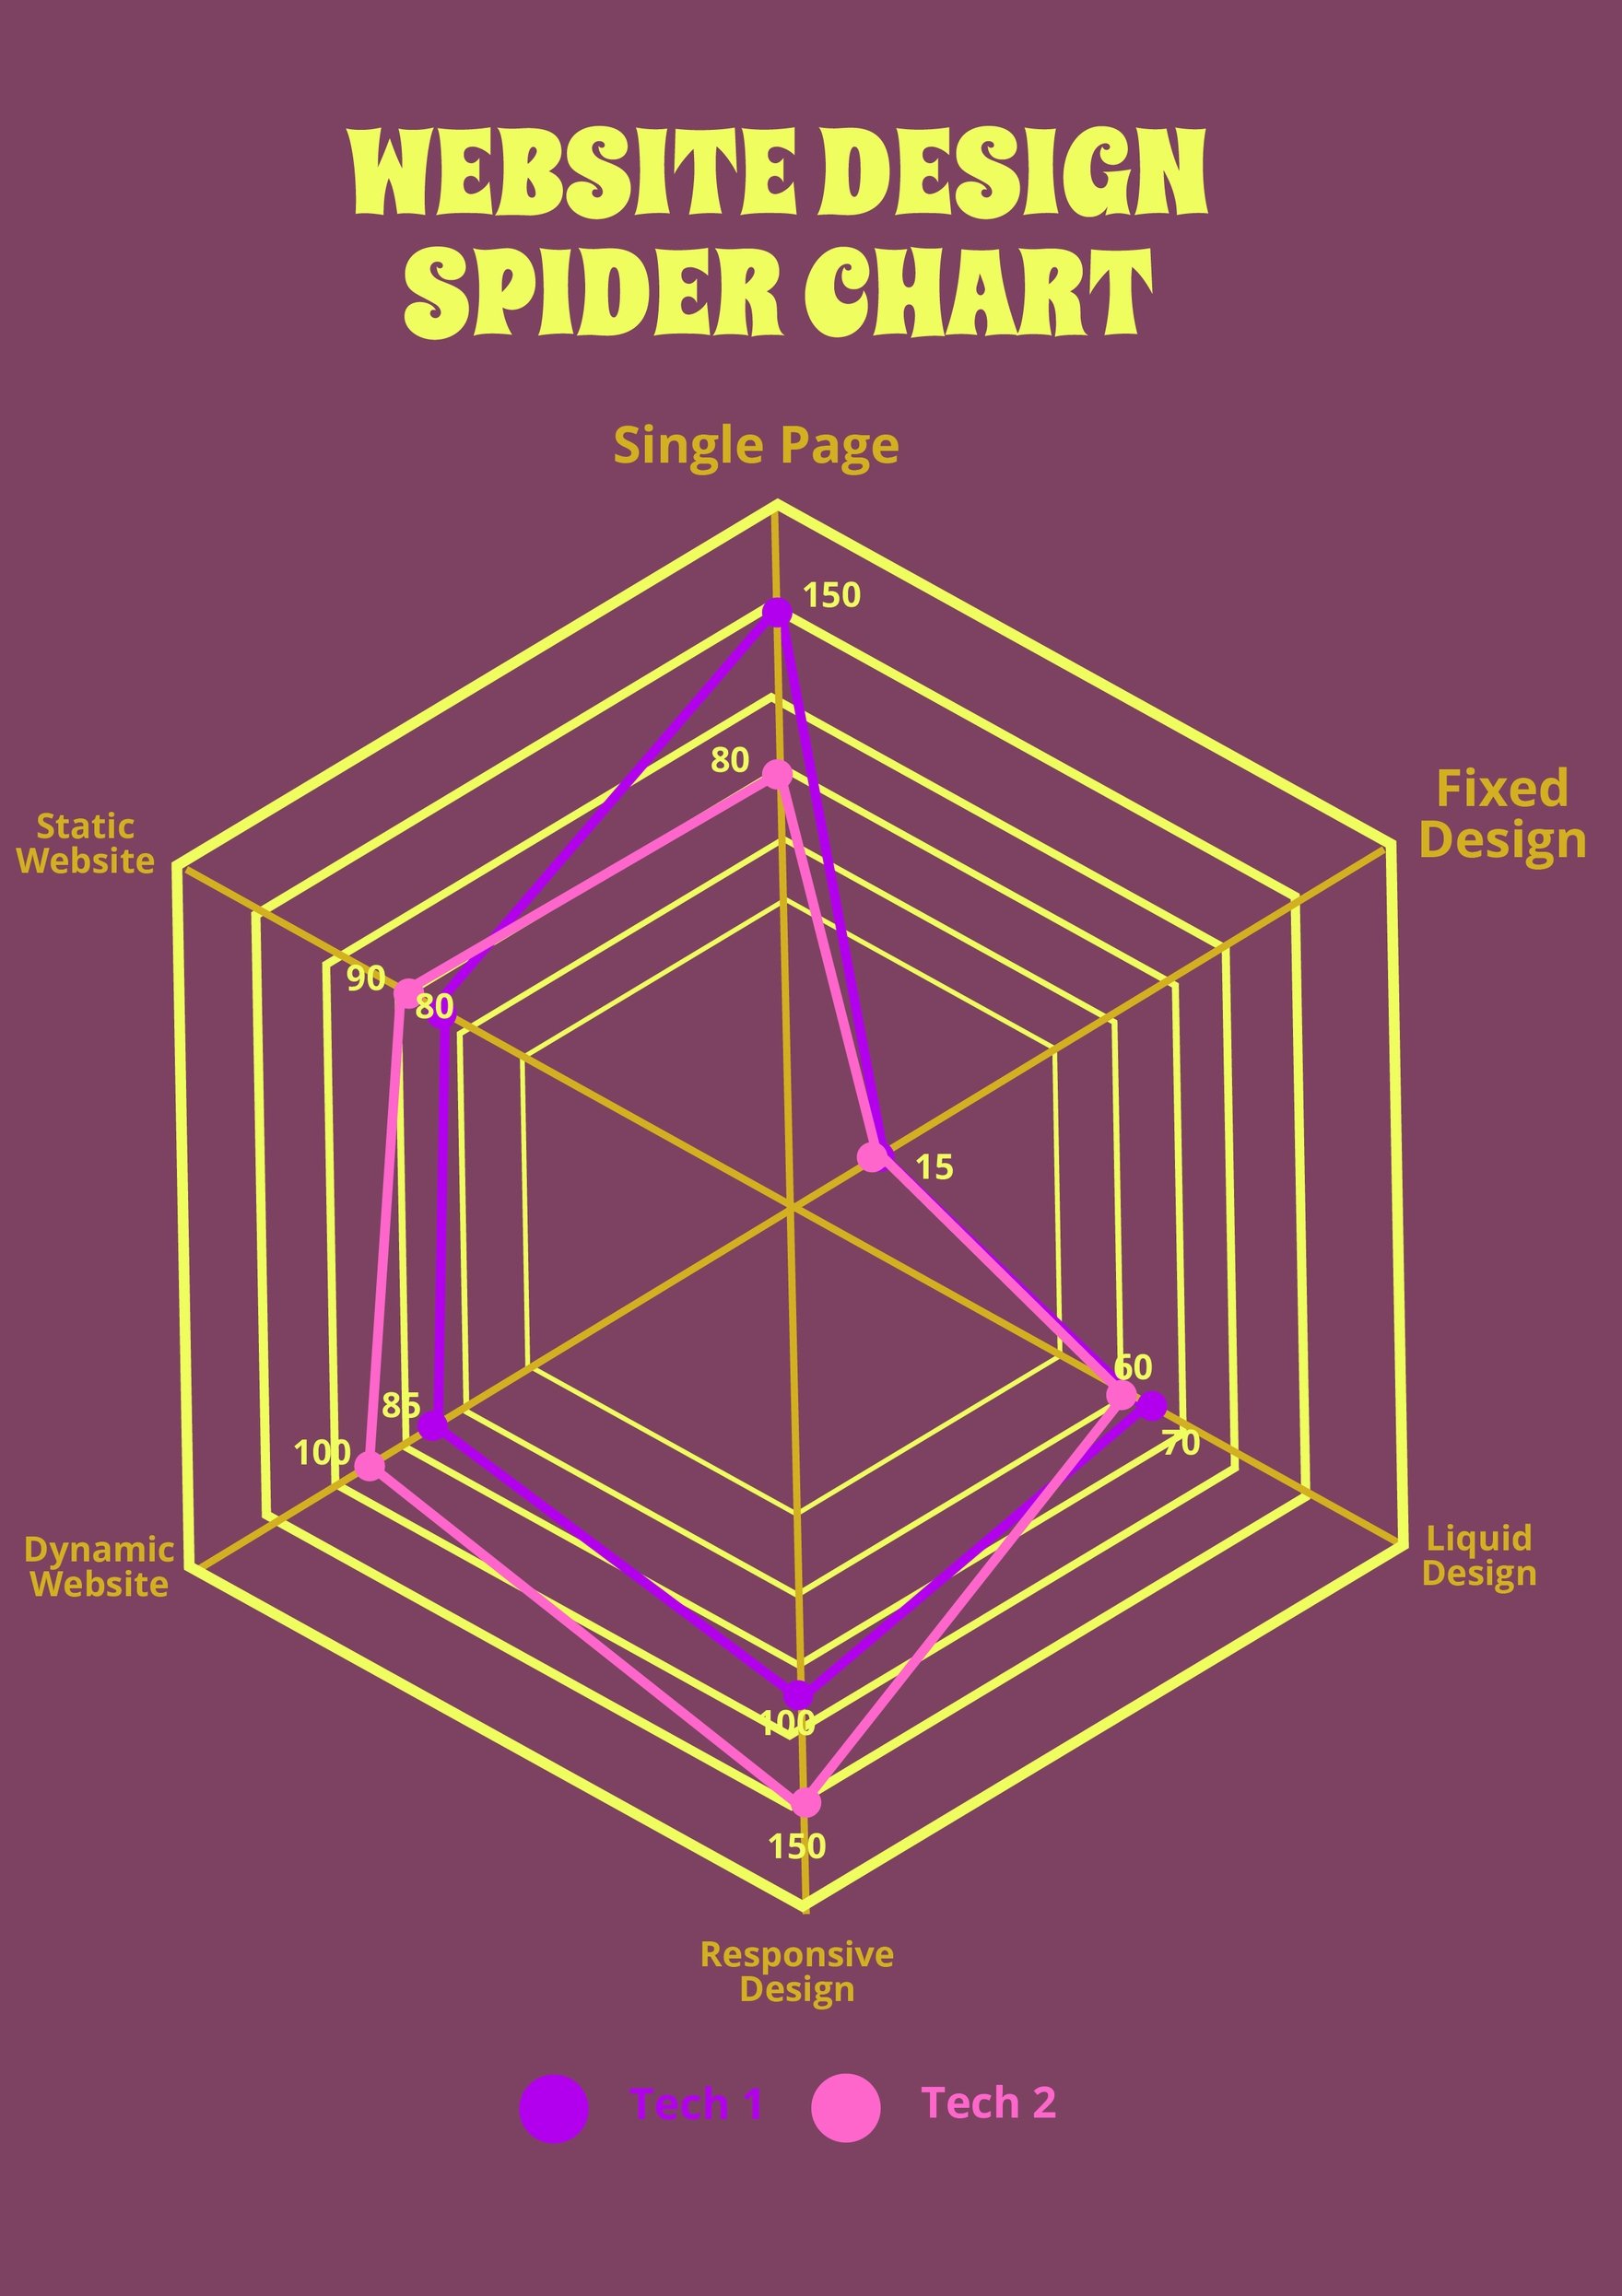 Spider Chart of Website Design